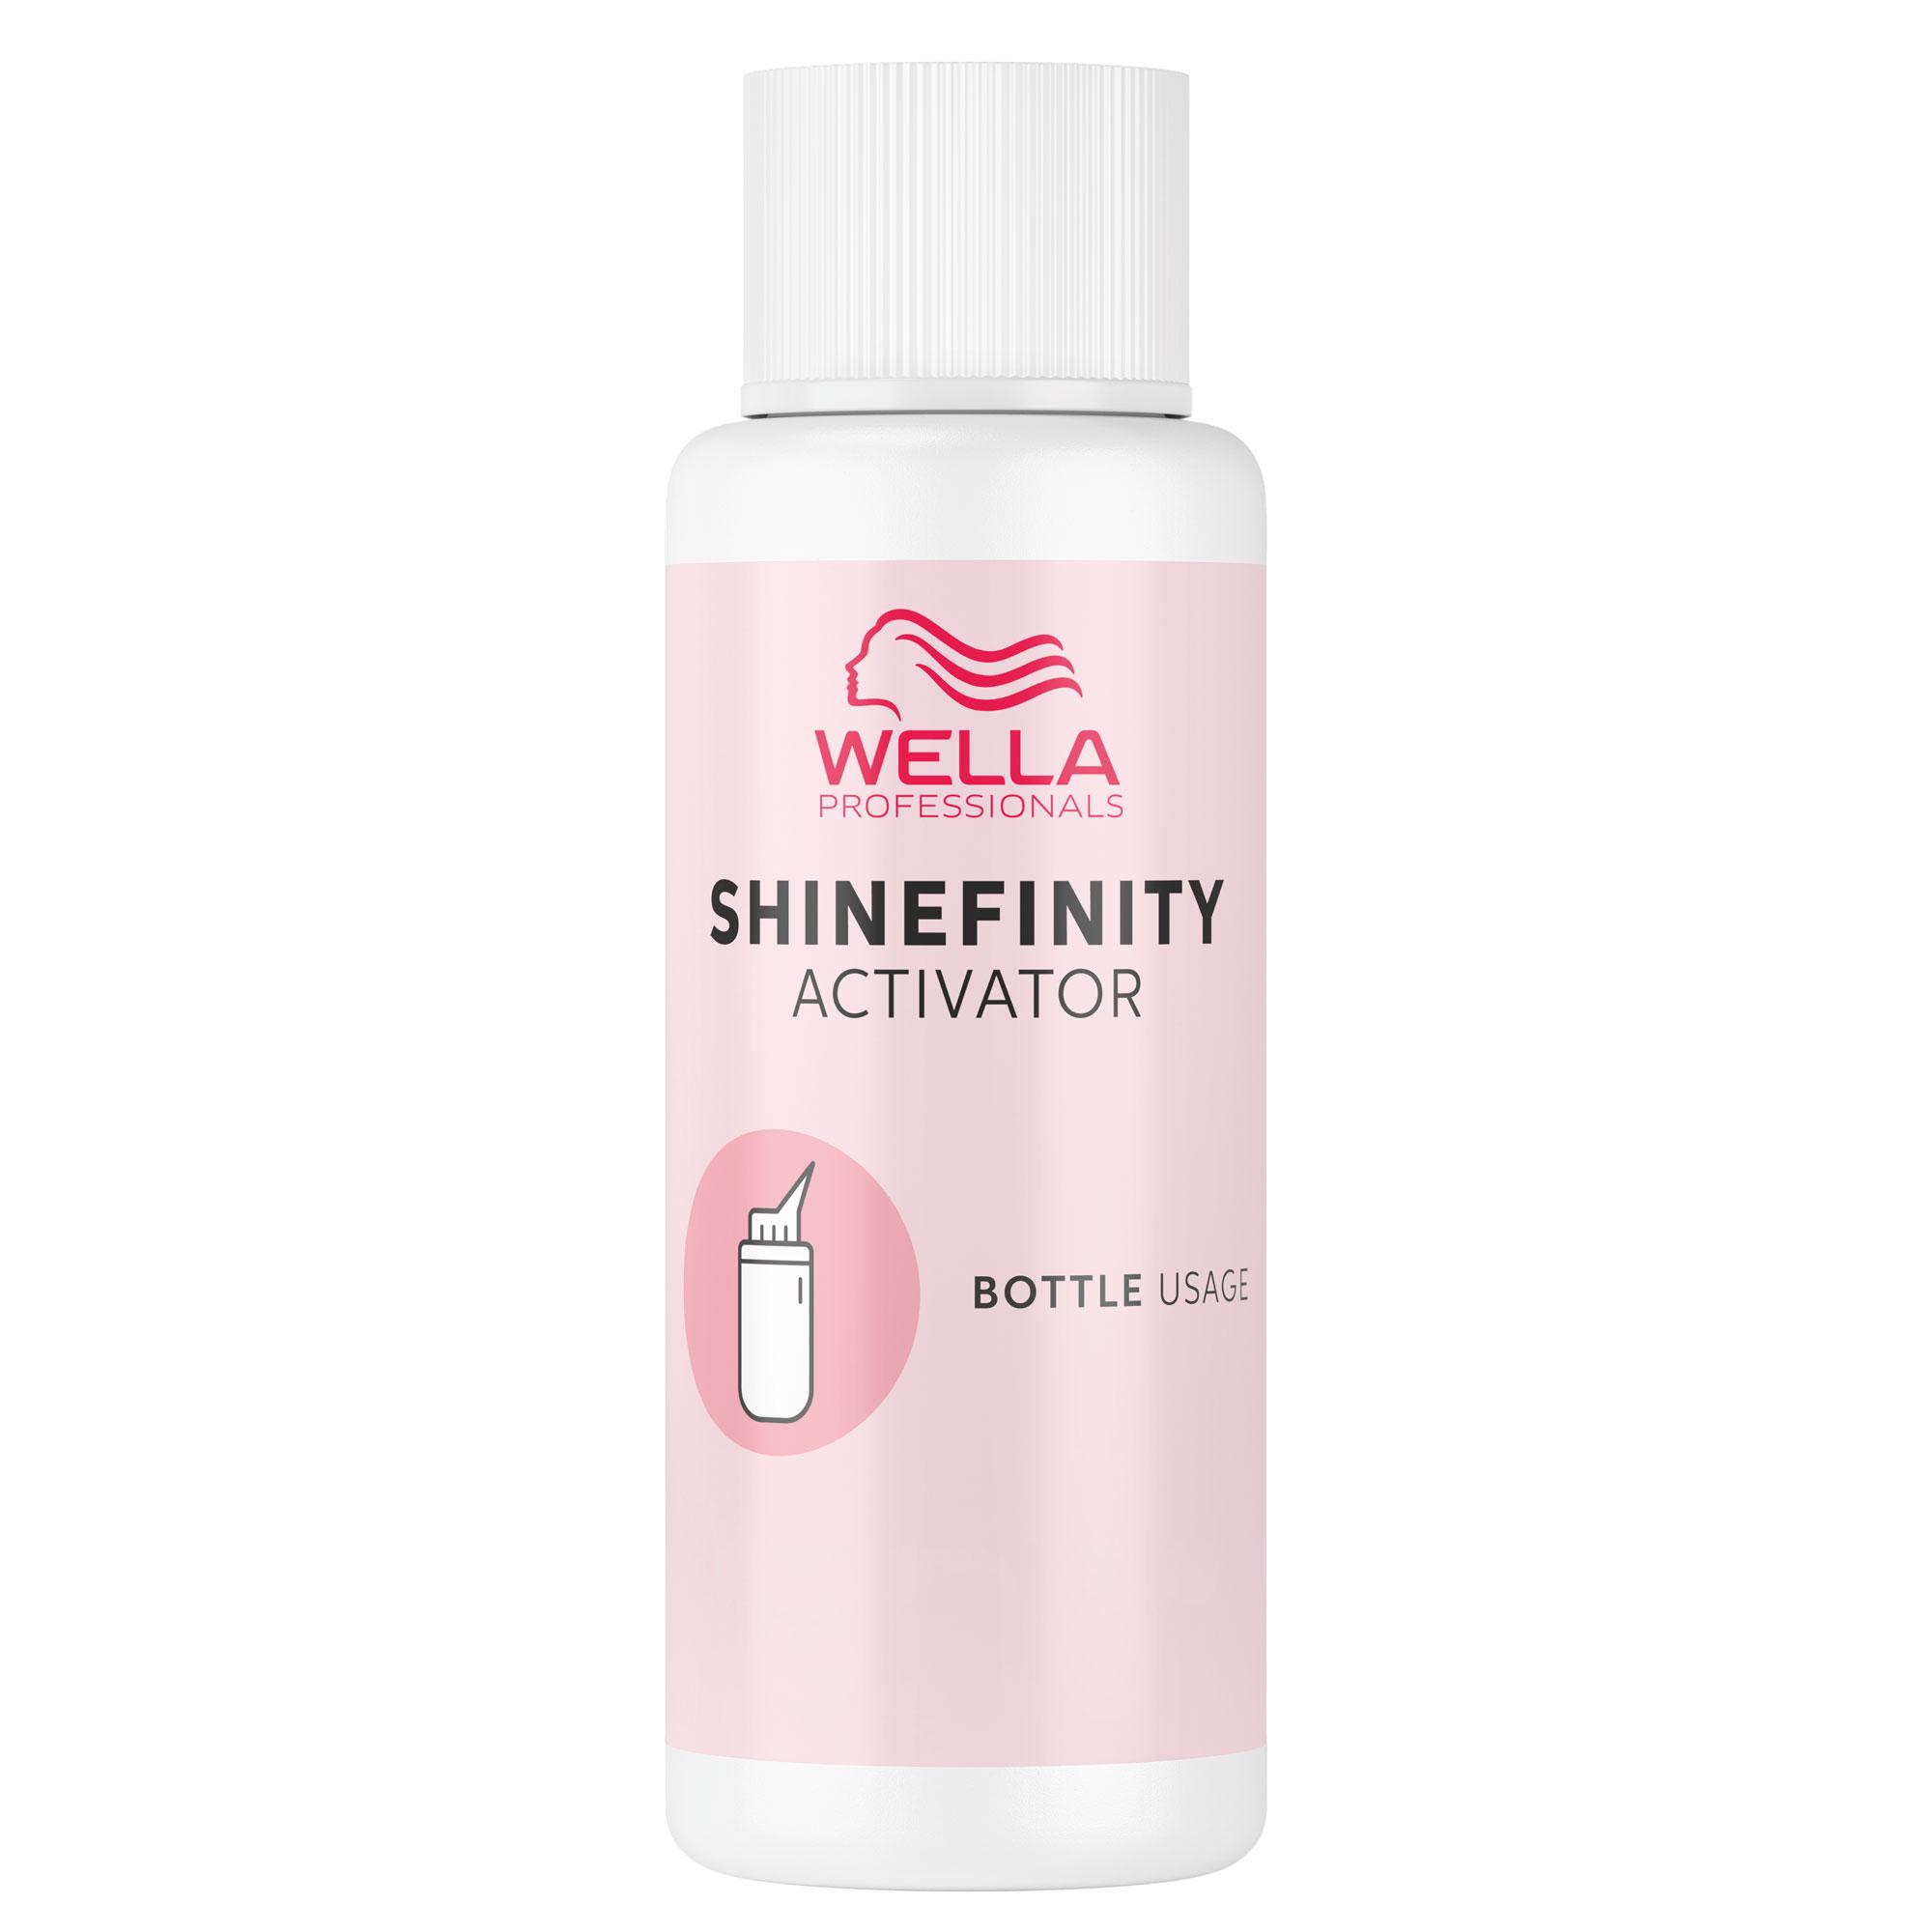 Wella Shinefinity Color Glaze Activator 2% - Bottle Usage